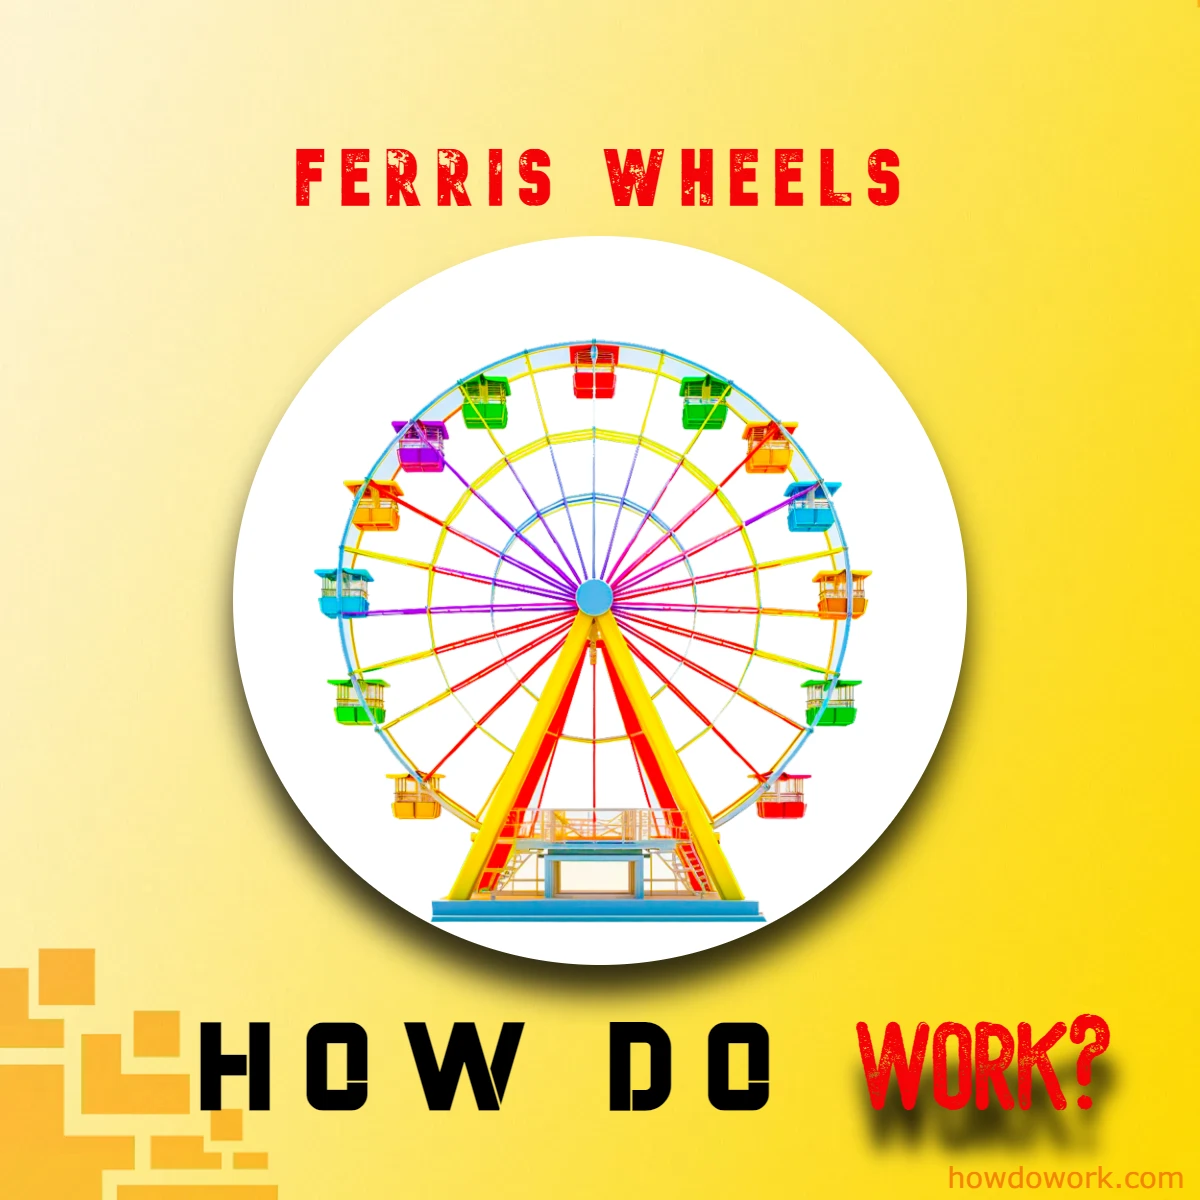 How Do Ferris Wheels Work